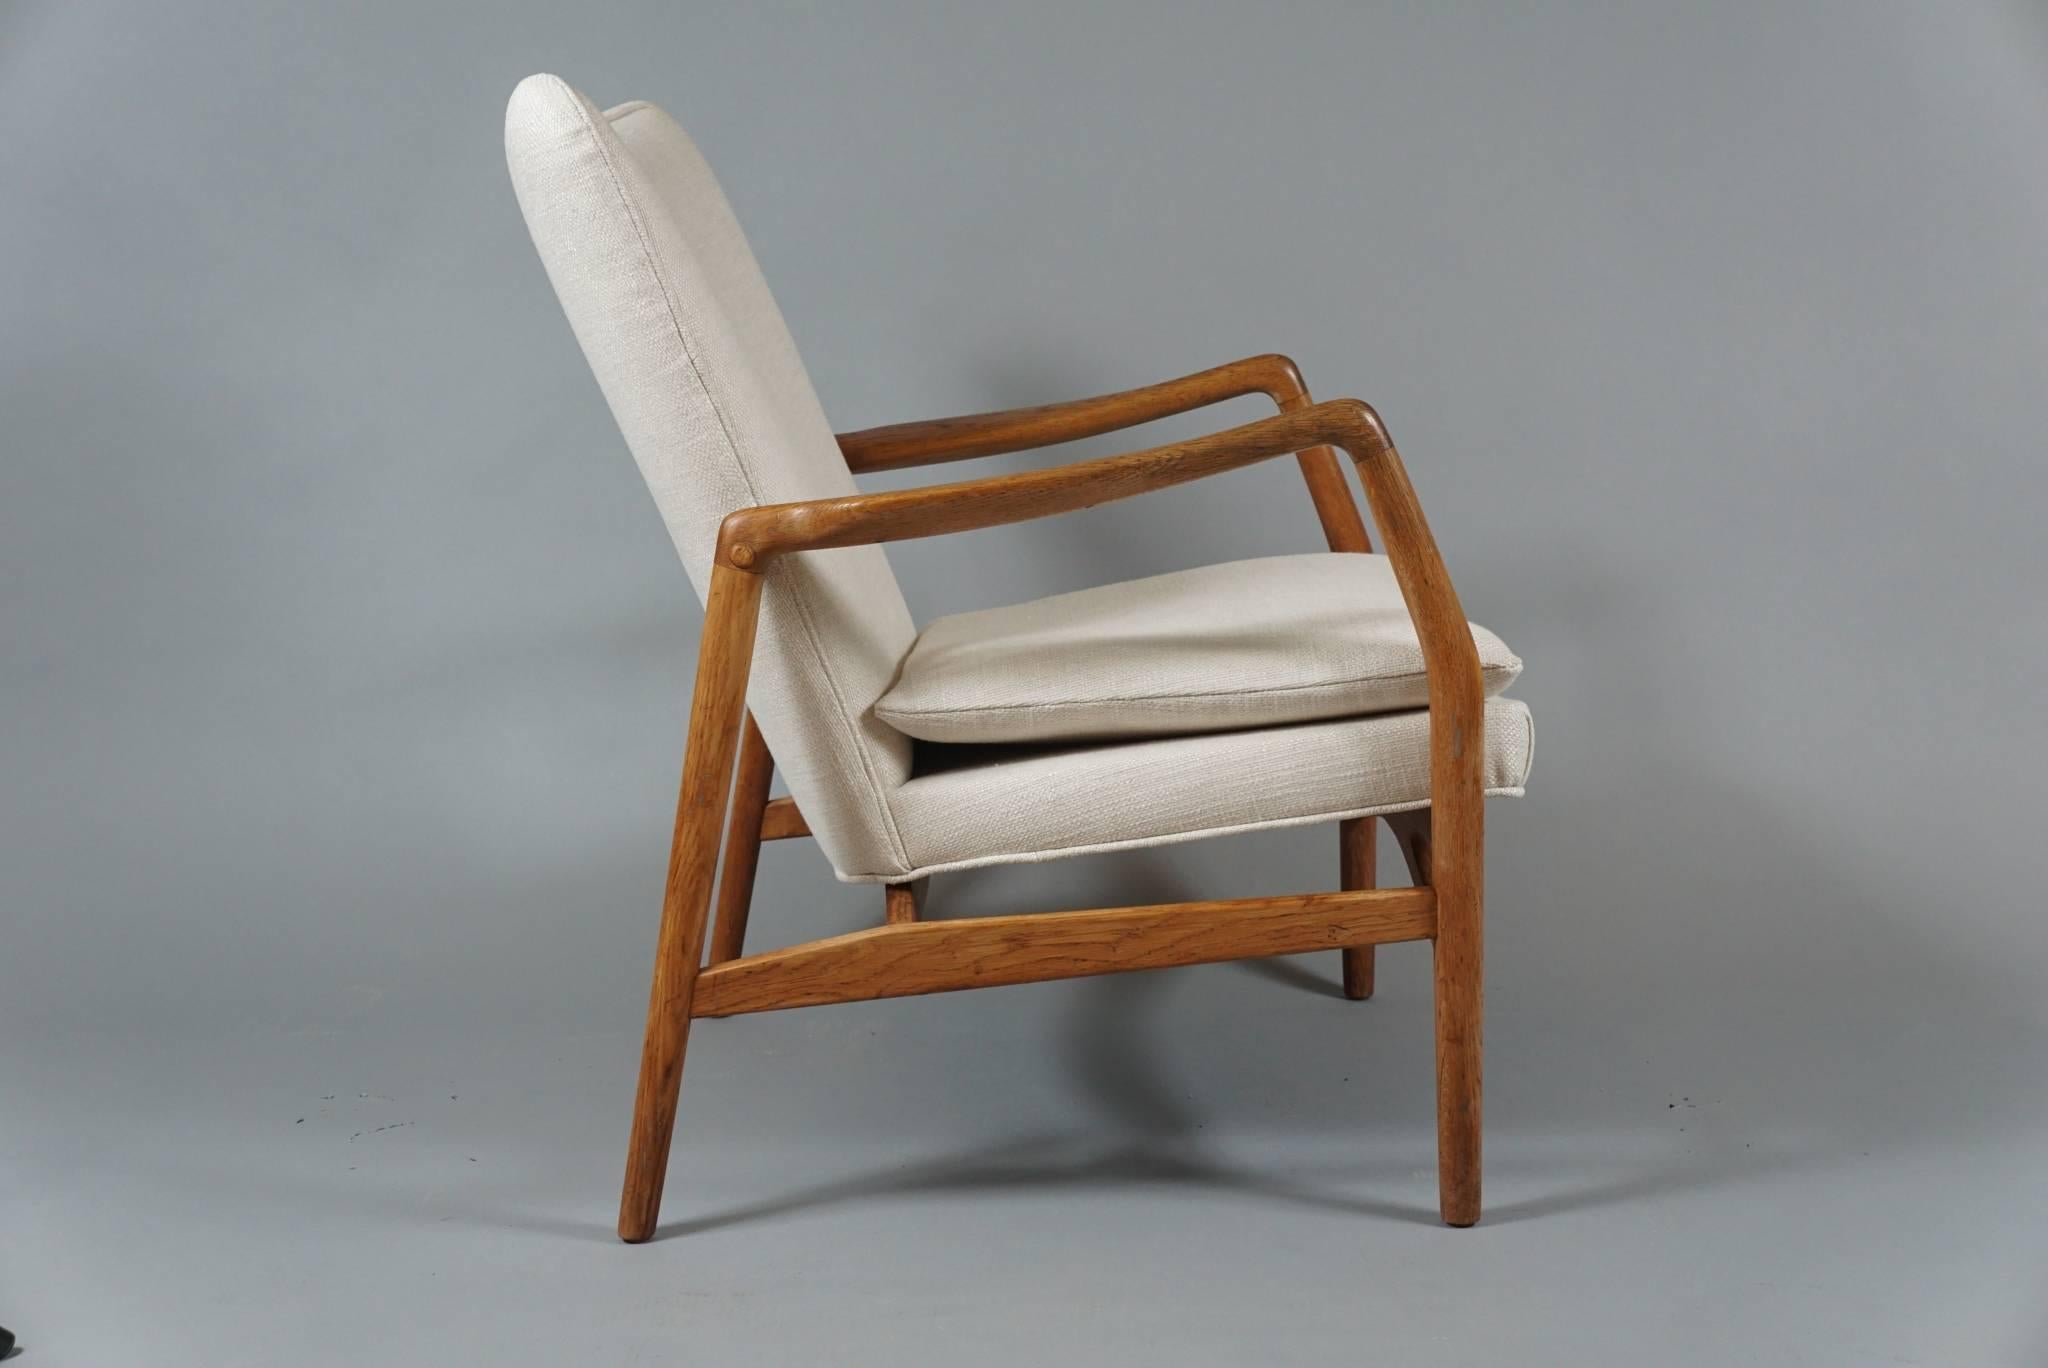 Oak frame open armchair by Danish designer Kurt Olsen, circa 1950s. Newly upholstered in a linen fabric.